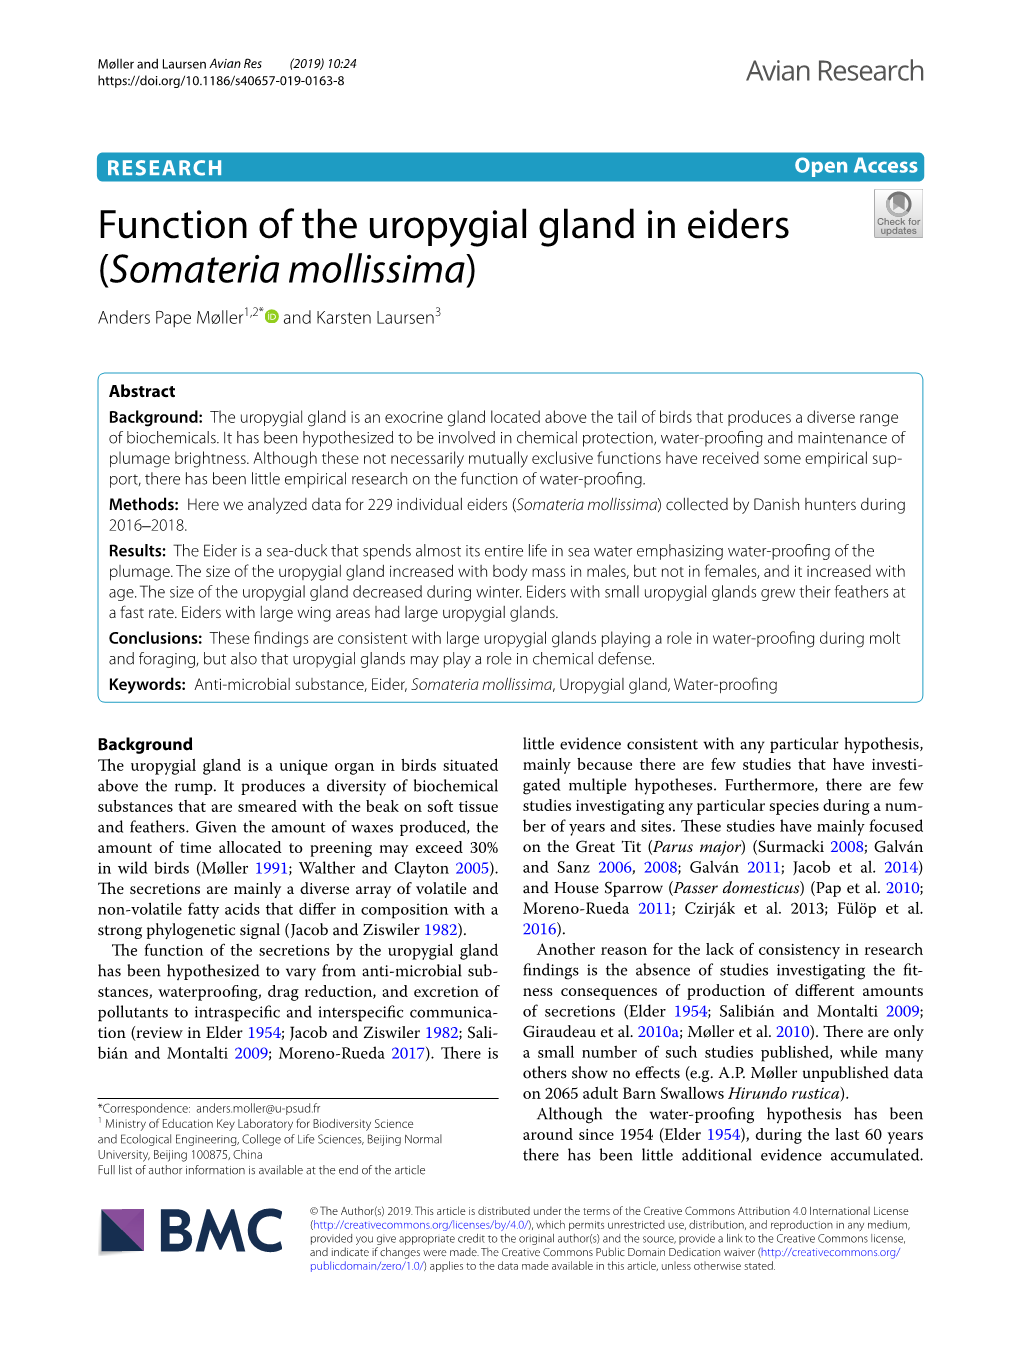 Function of the Uropygial Gland in Eiders (Somateria Mollissima) Anders Pape Møller1,2* and Karsten Laursen3